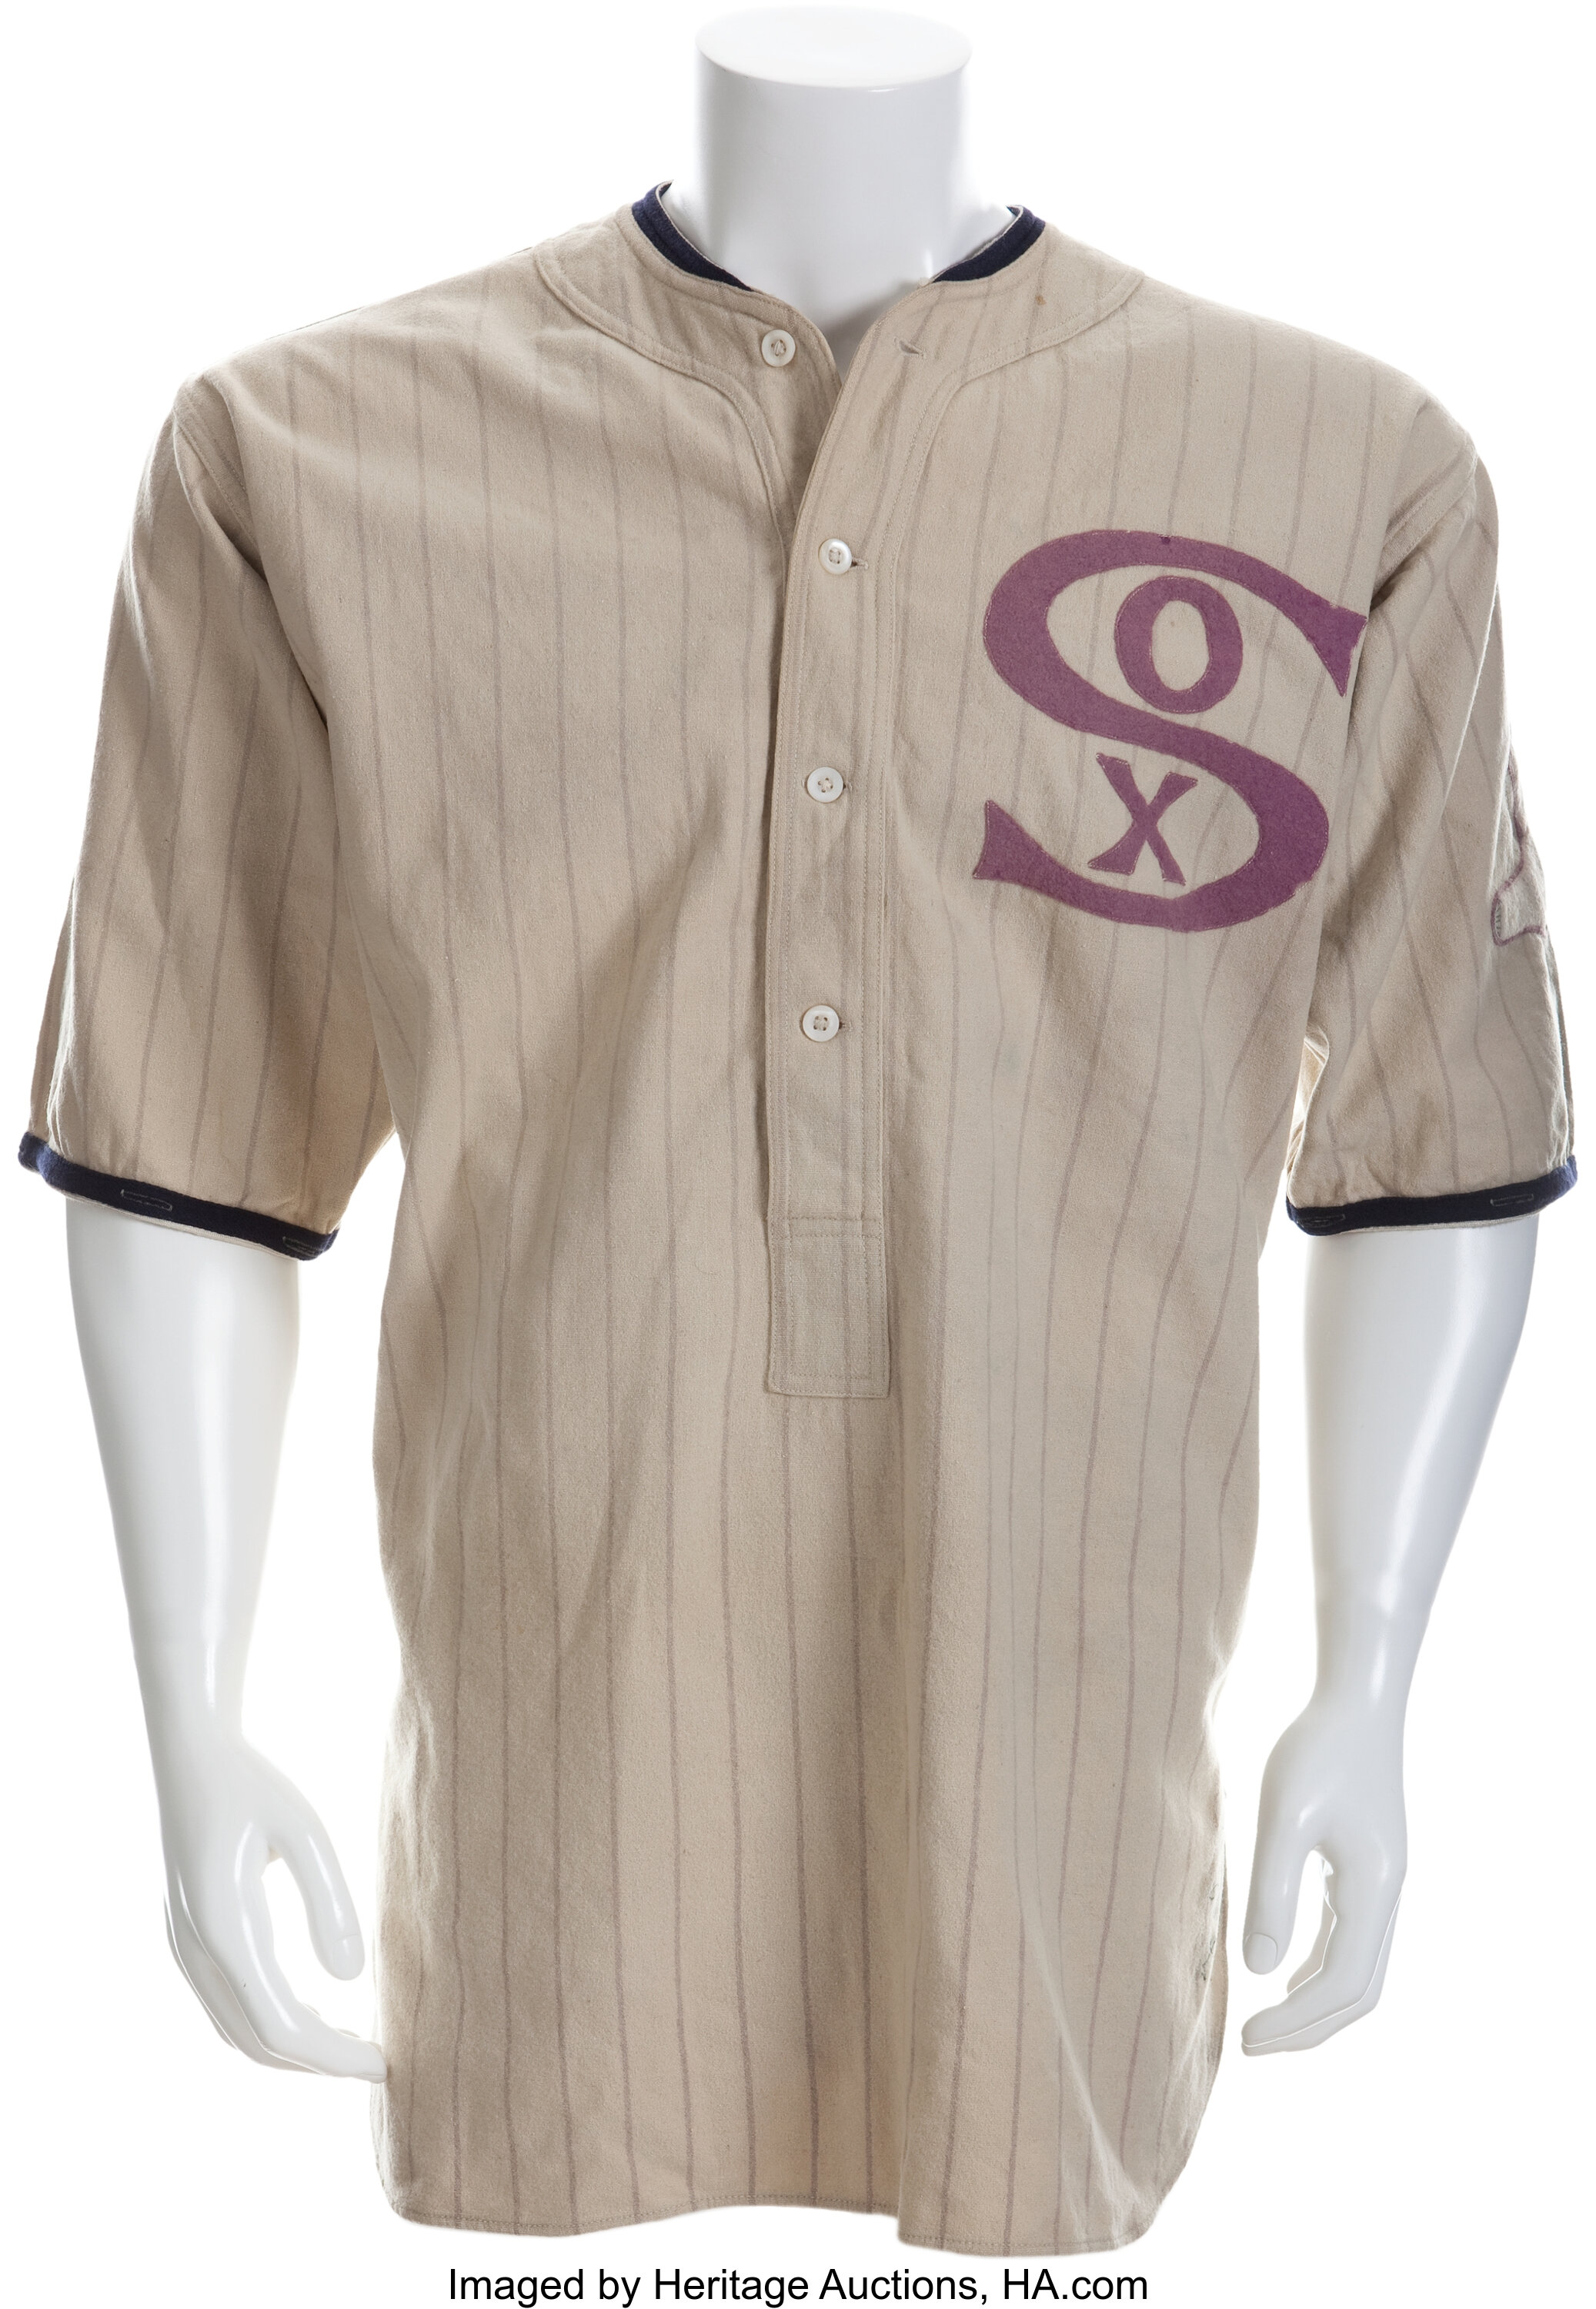 1920 Urban Red Faber Game Worn Chicago White Sox Uniform., Lot #80077